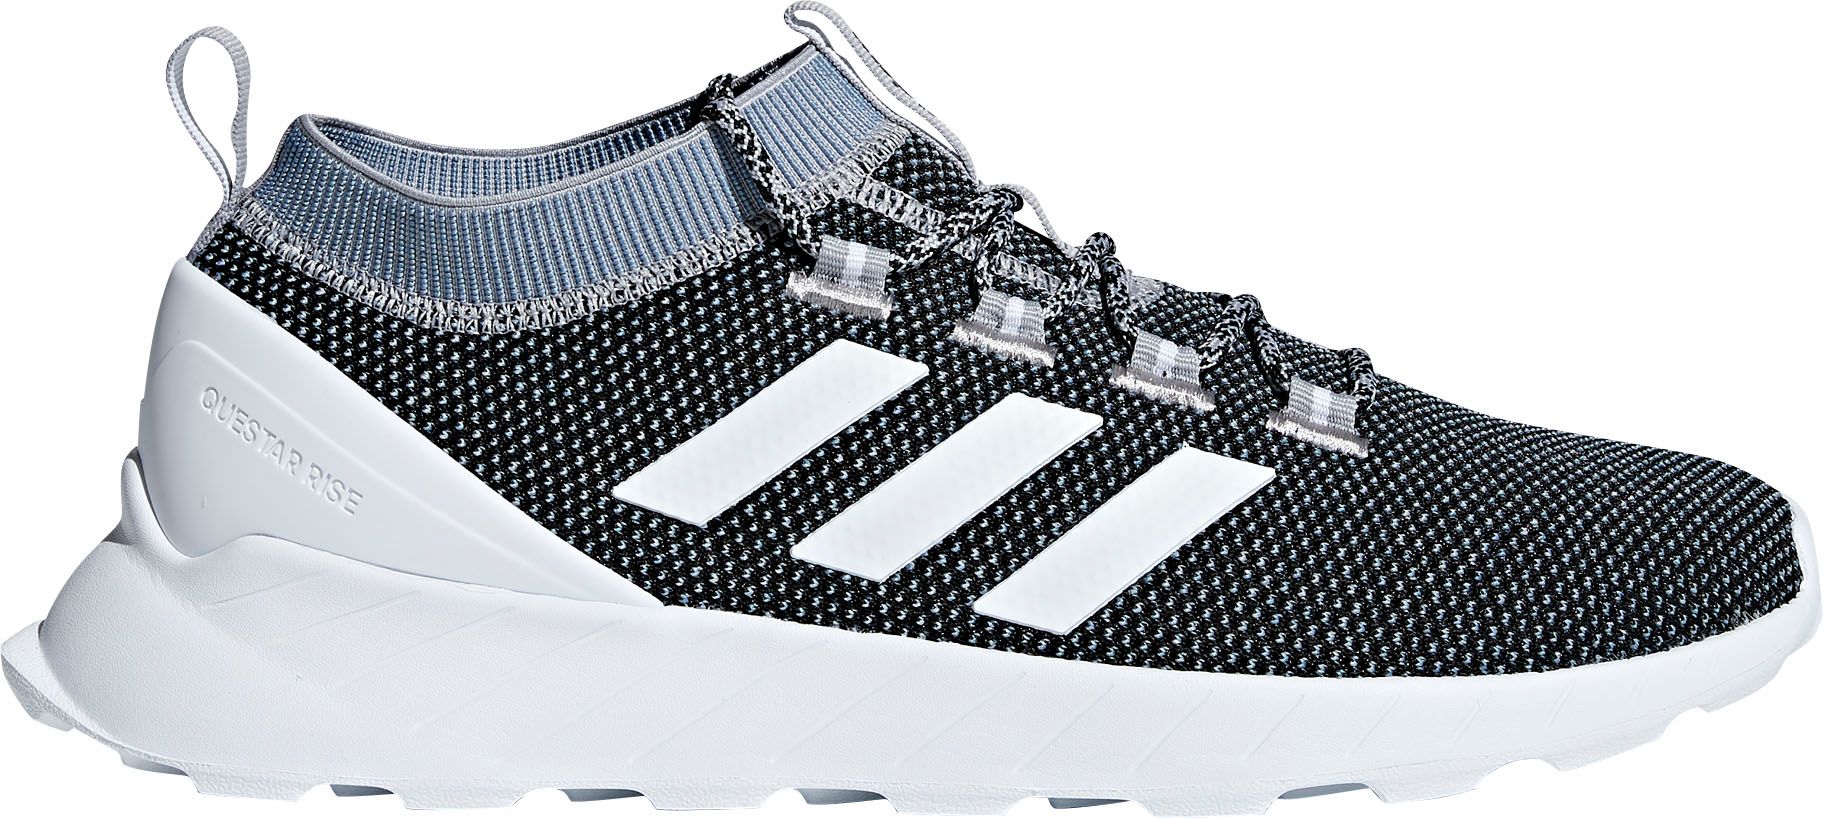 adidas men's questar rise running shoes